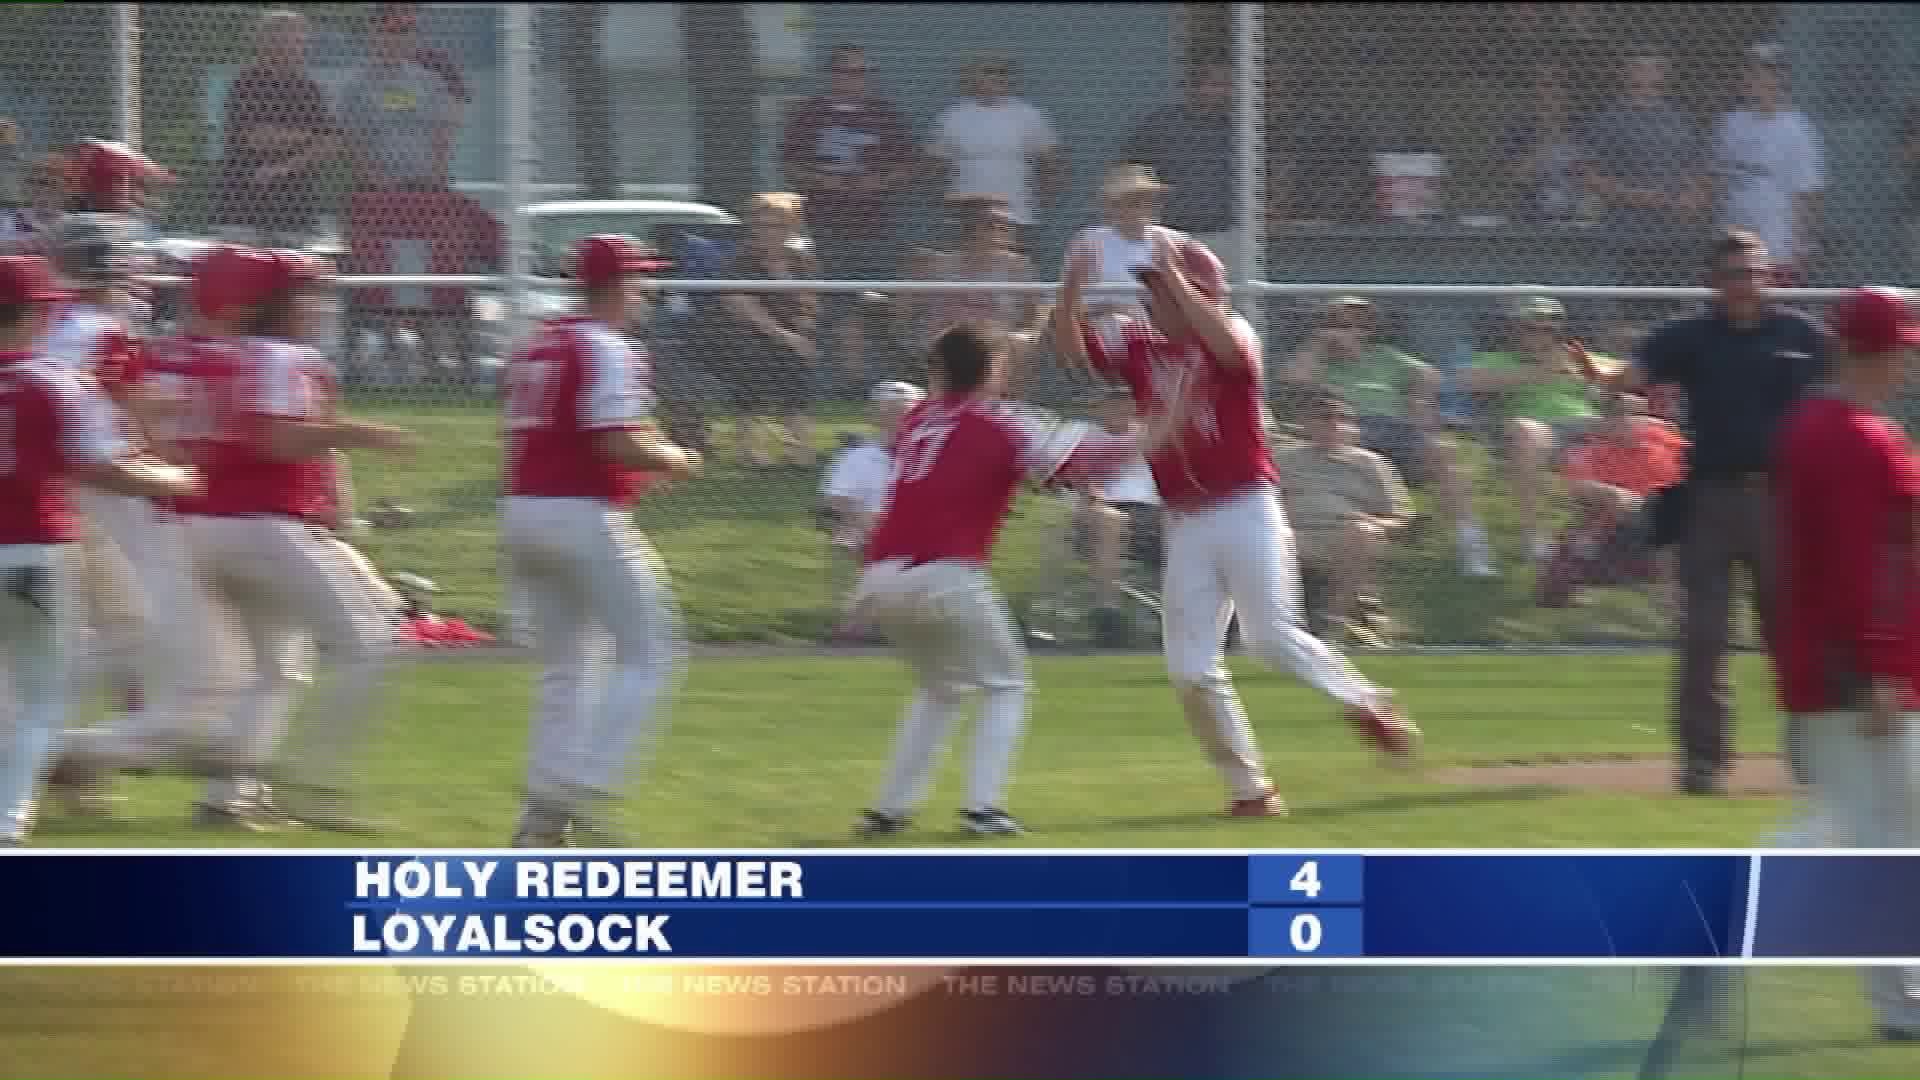 Holy Redeemer vs Loyalsock baseball